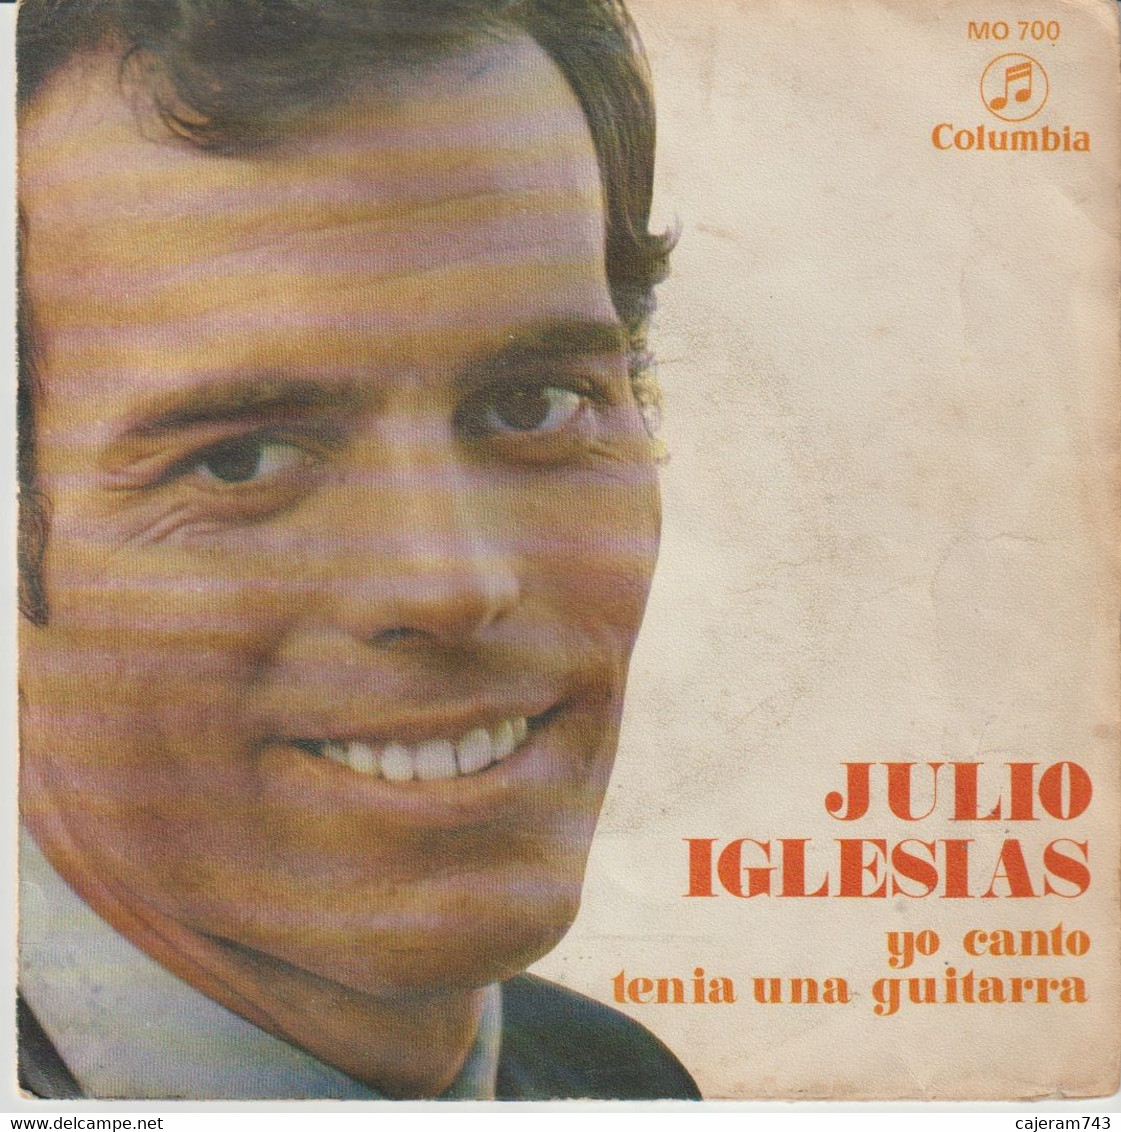 45T. JULIO IGLESIAS. Yo Canto - Tenia Una Guitarra. Pressage ESPAGNE - Spain - Sonstige - Spanische Musik